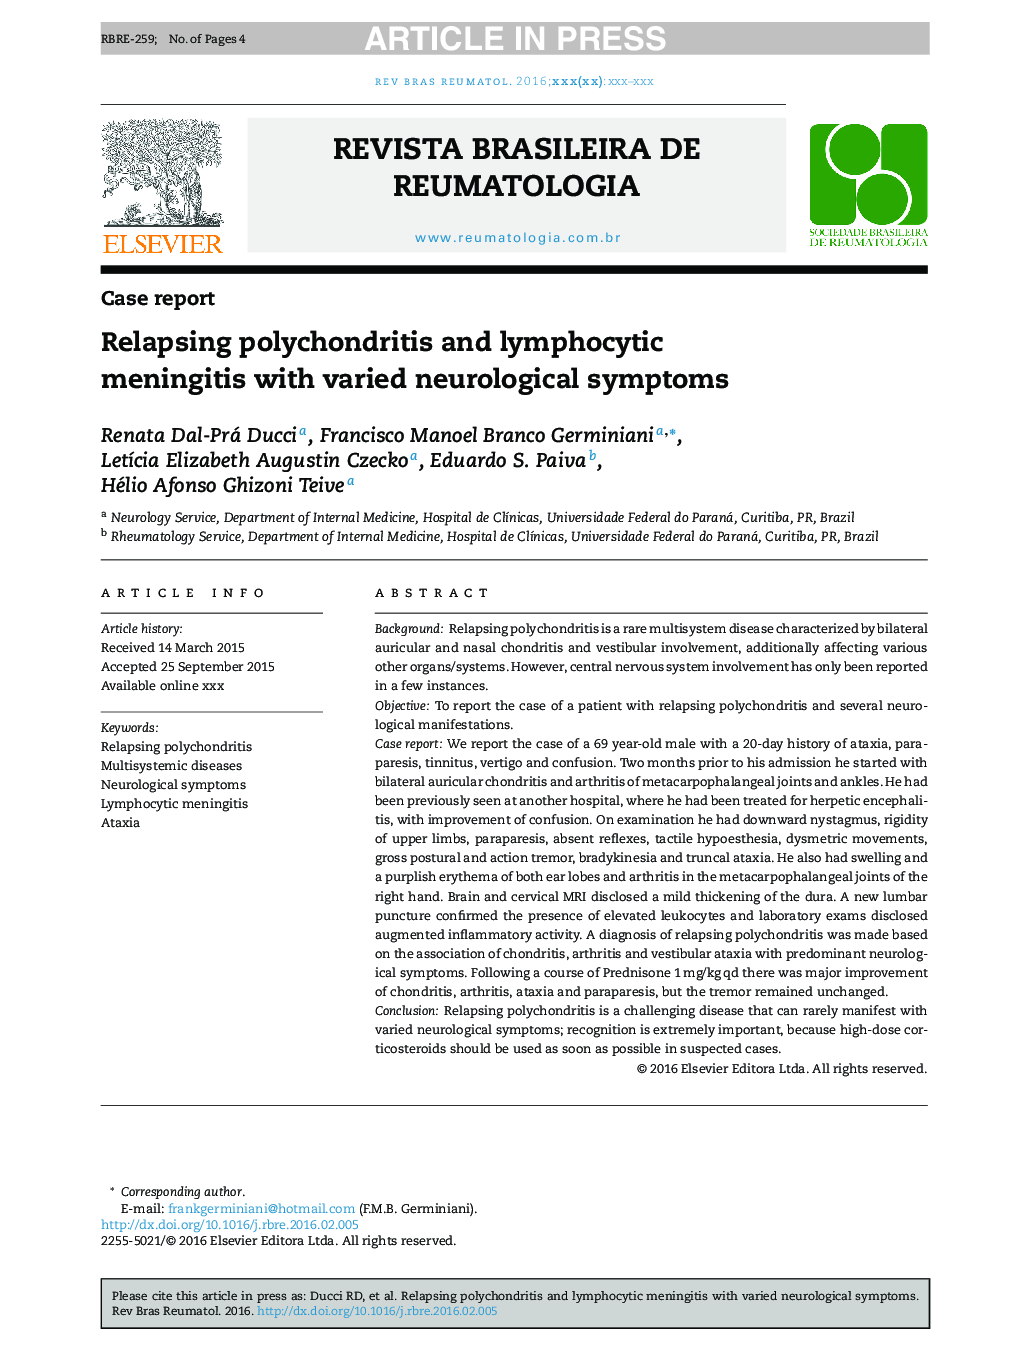 Relapsing polychondritis and lymphocytic meningitis with varied neurological symptoms